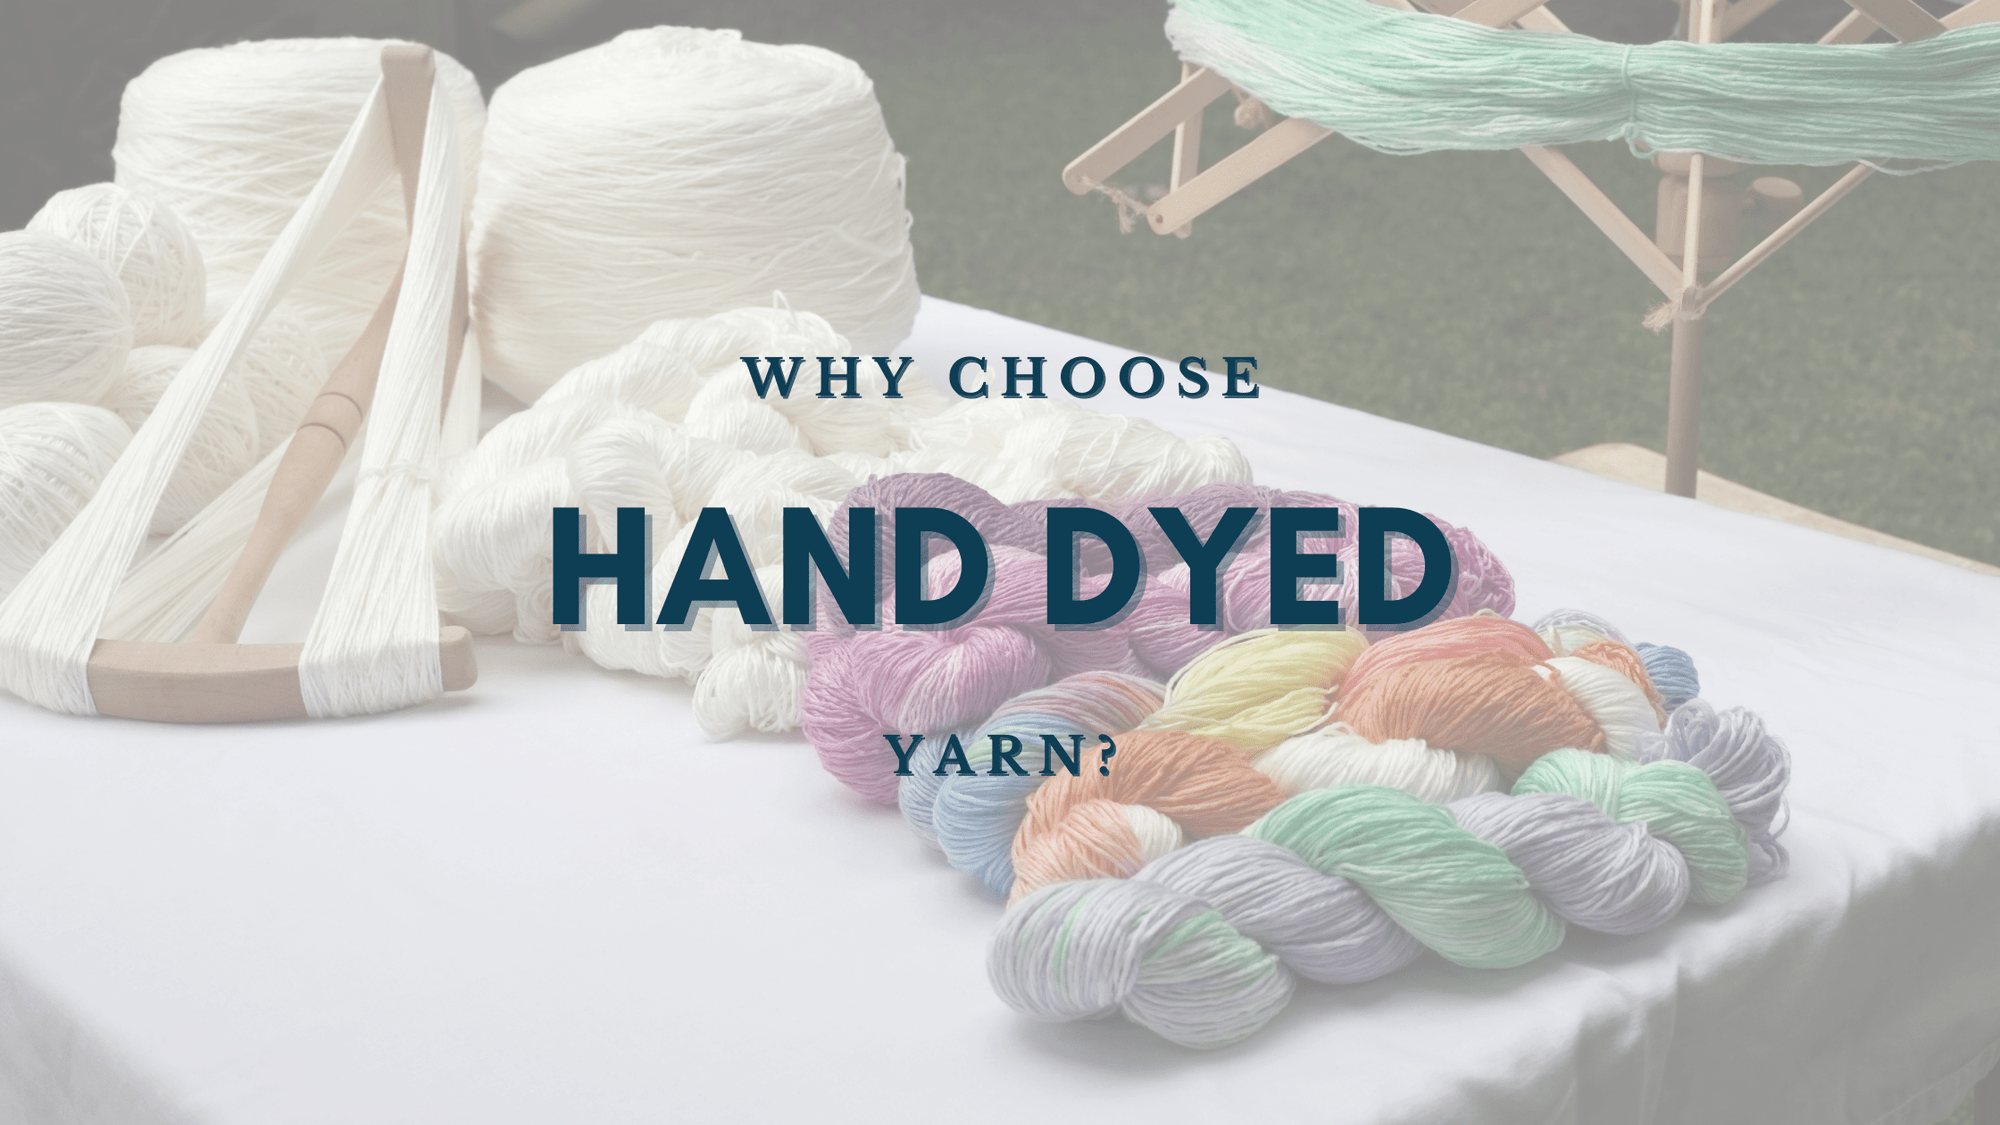 Why choose hand-dyed yarn?